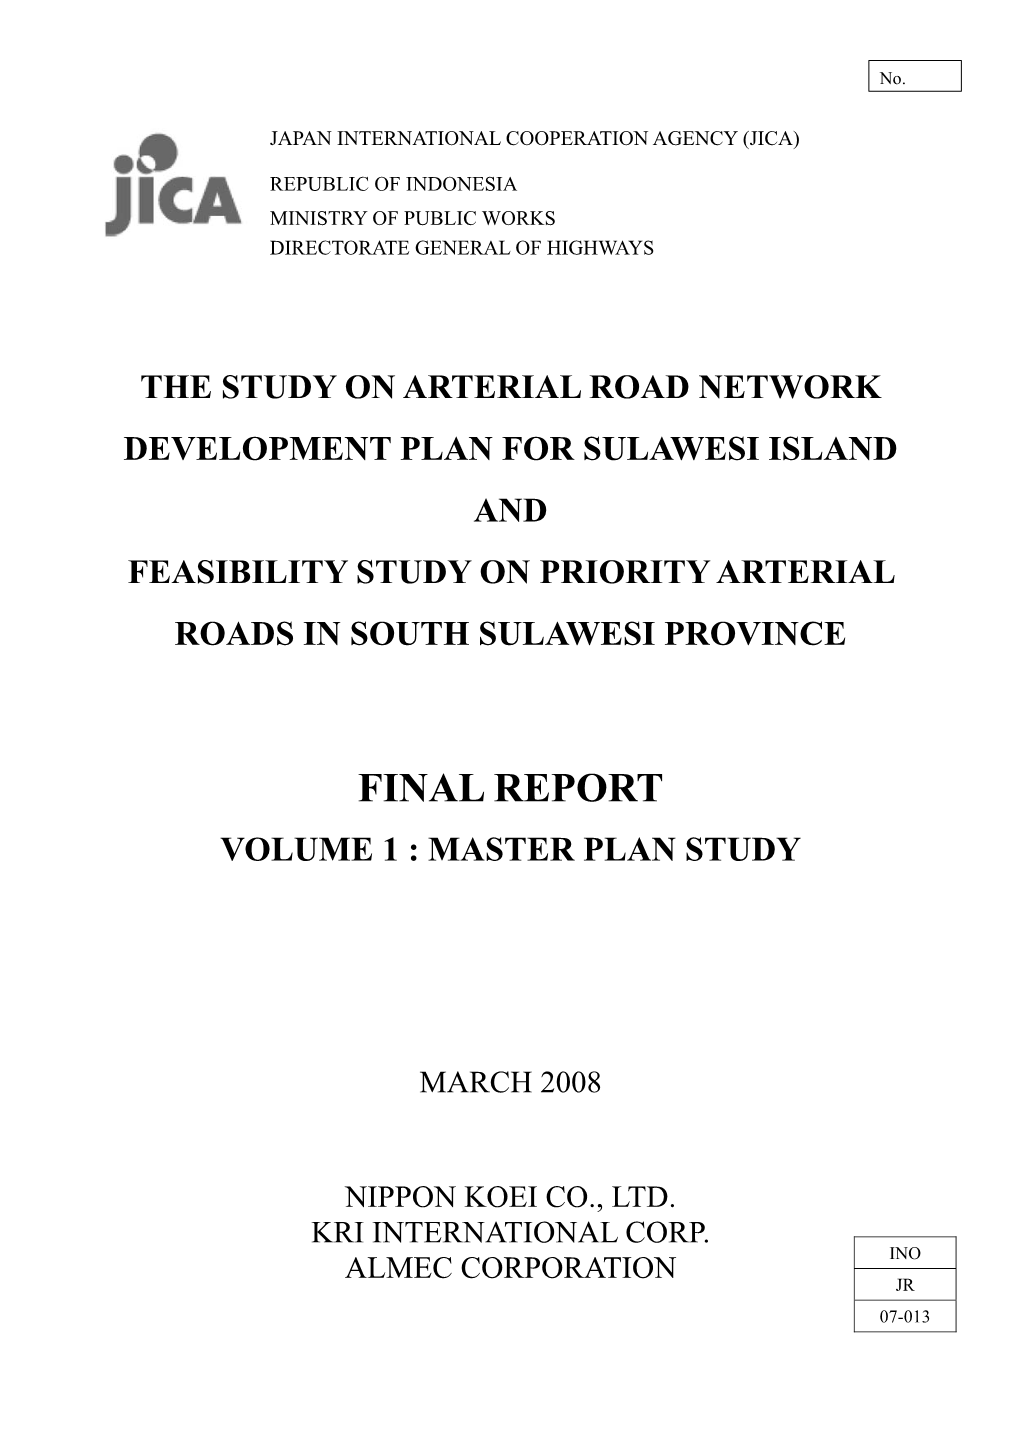 Final Report Volume 1 : Master Plan Study